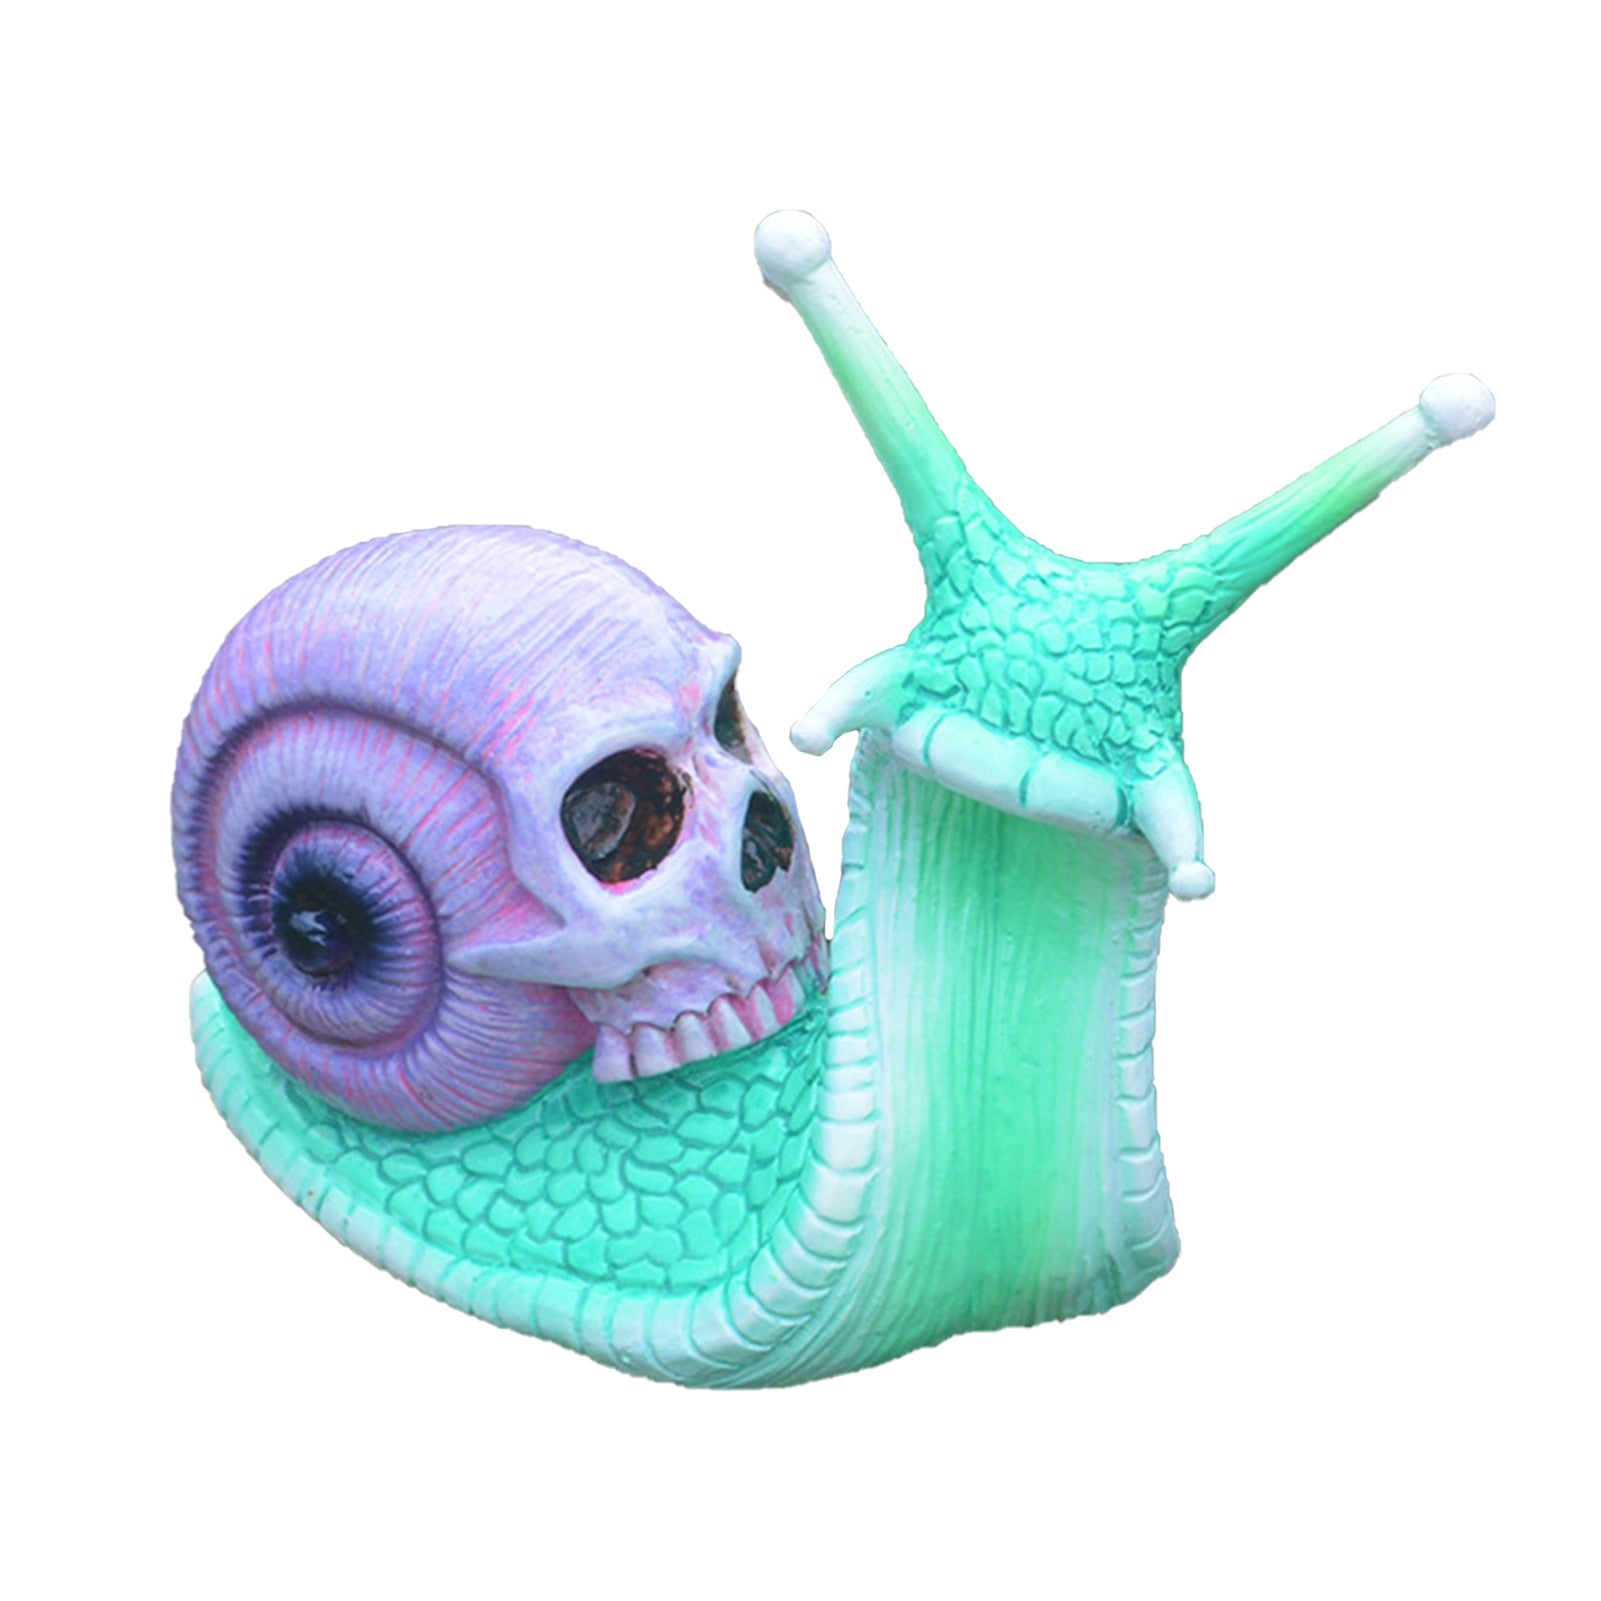 Purper Snail Sculpture / Skull Sculpture / Snail Garden Statues / Gothic Decoration